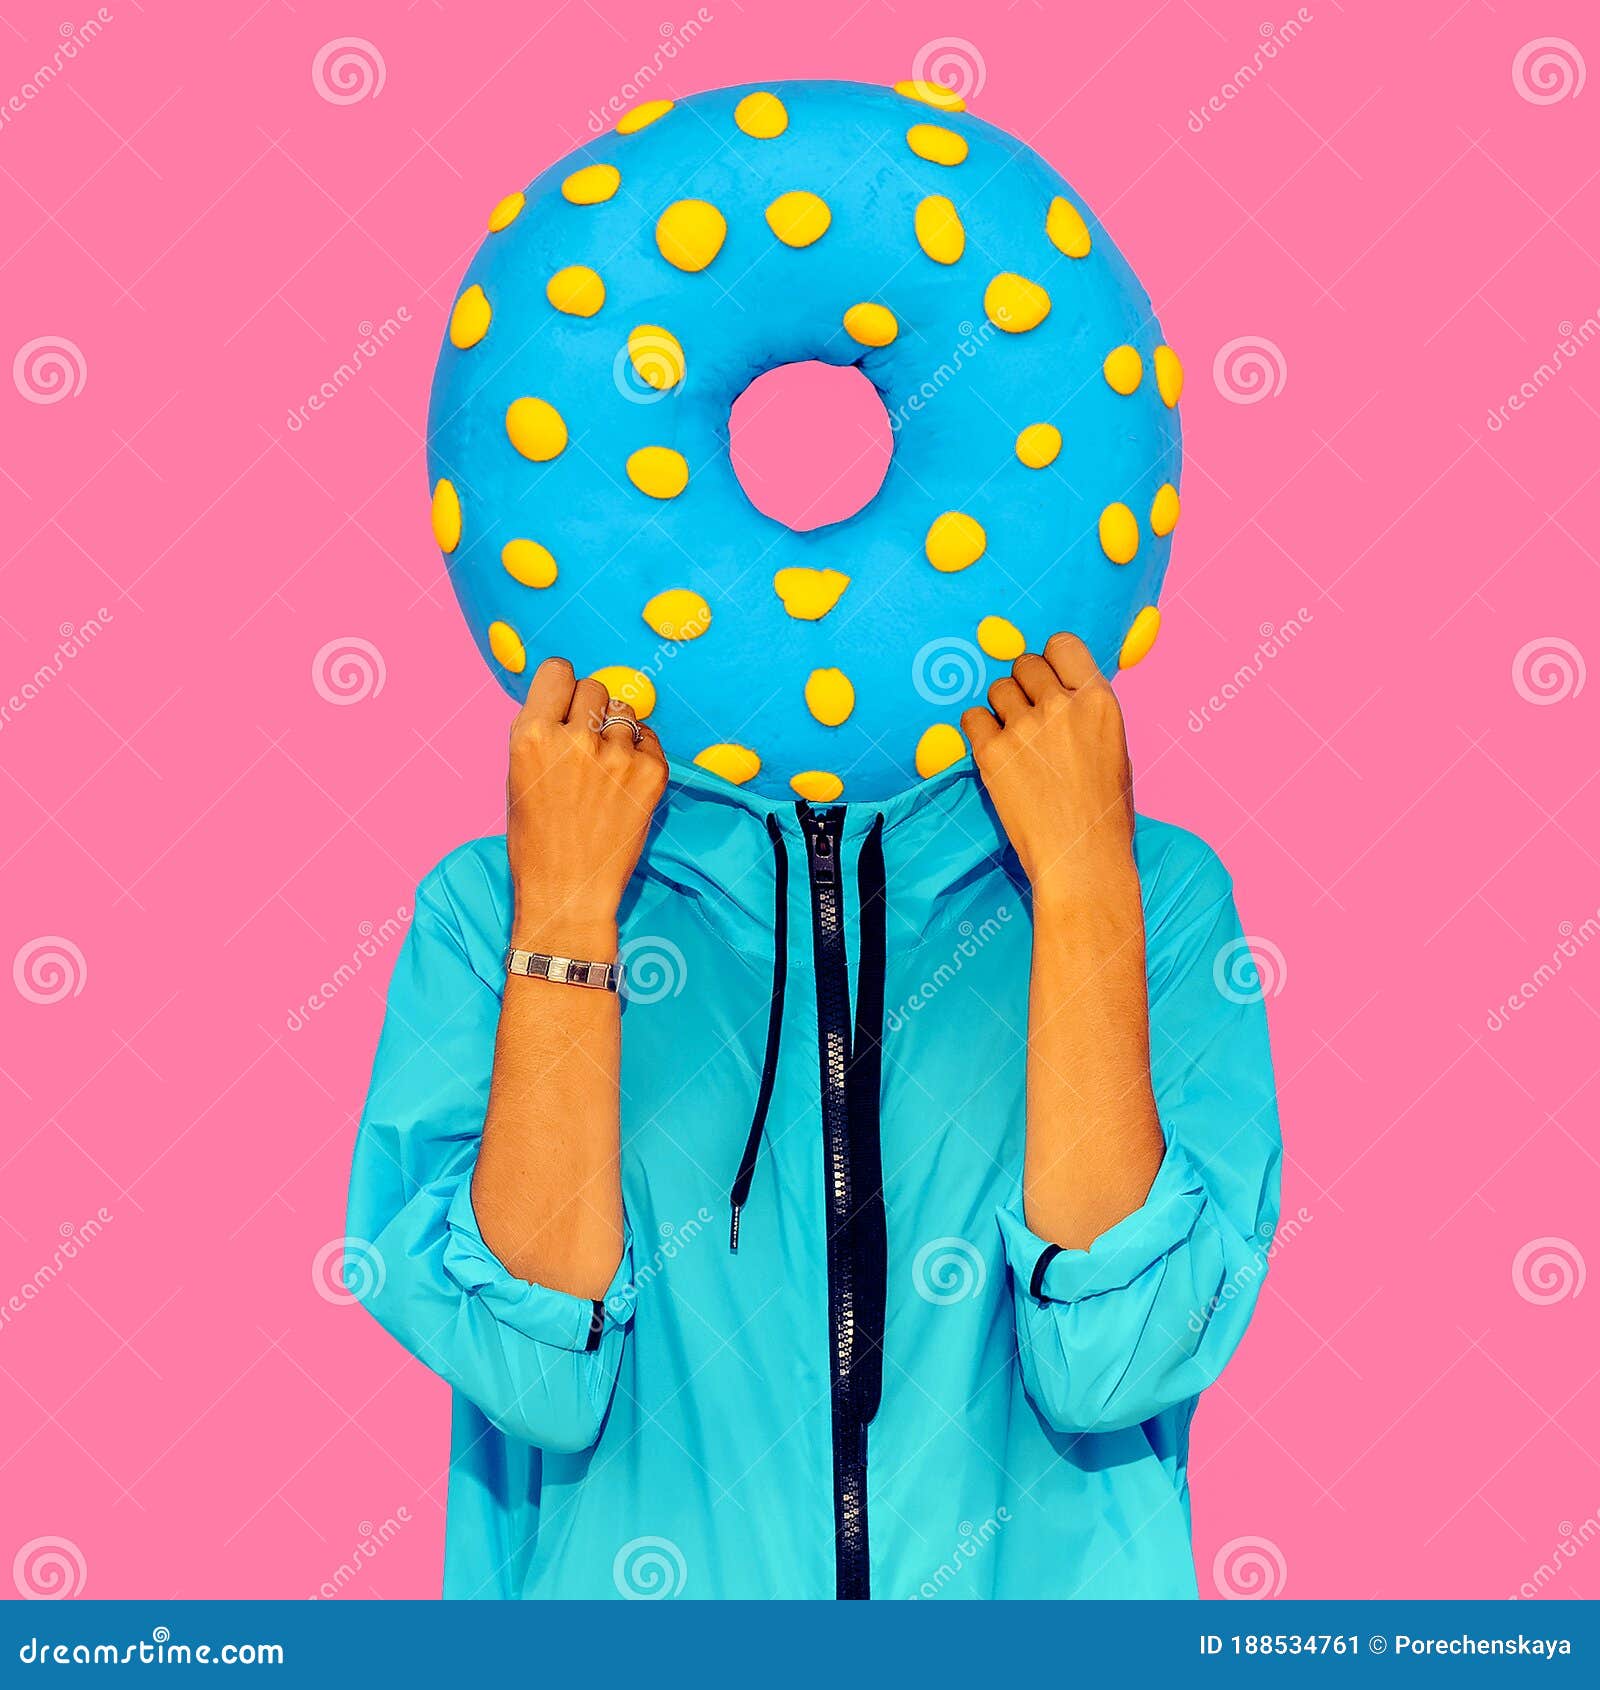 contemporary art collage. minimal concept. donut lover art